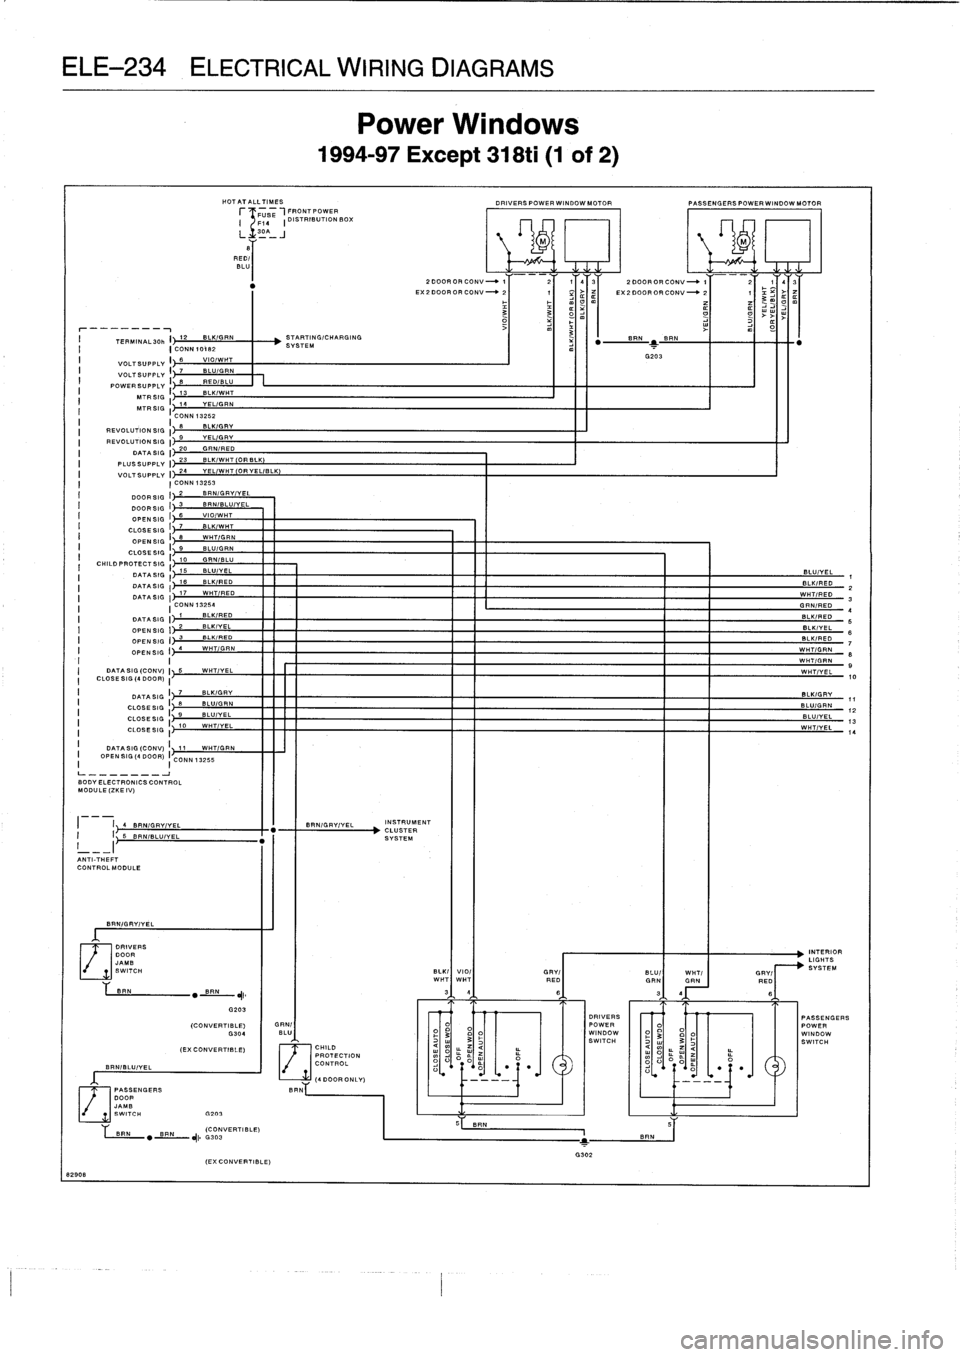 BMW 323i 1993 E36 Repair Manual 
ELE-234
ELECTRICAL
WIRING
DIAGRAMS

82908

L
1
3
--J
8
RED/
BLU

I

	

TERMINAL30H
I
12

	

BLKIGRN

	

STARTING/CHARGING
I

	

ICONN10182

	

SYSTEM

BLK/GRV
REVOLUTIONSIG
I~
~
9
REVOLUTIONSIG
I)
-
